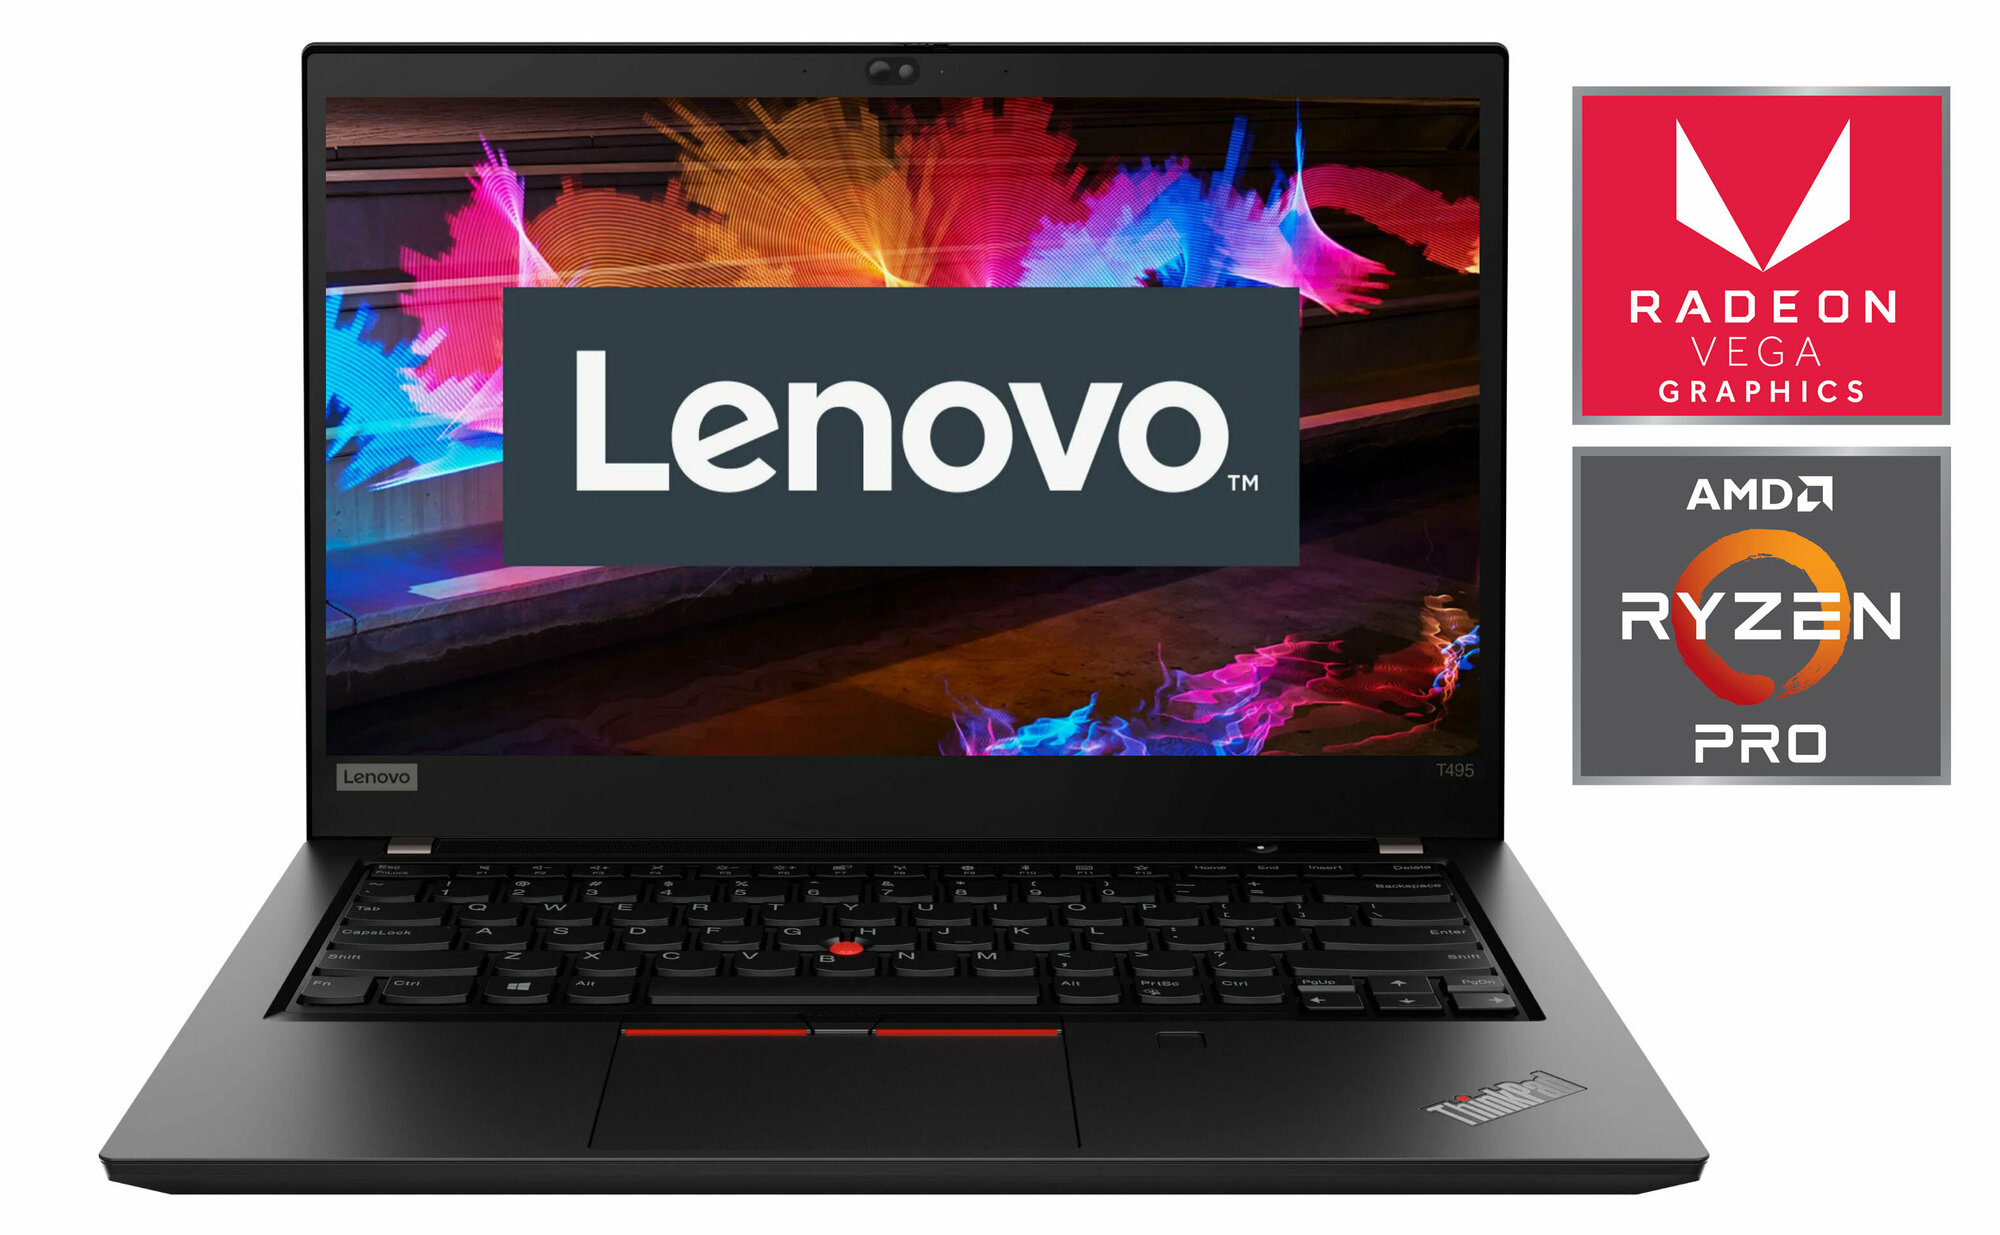 Ноутбук Lenovo THINKPAD T495 AMD Ryzen 3 PRO 3300U 2.1 ГГц, Память 8 ГБ, Диск SSD 256 ГБ, AMD Radeon Vega 6, Экран 14" (IPS)